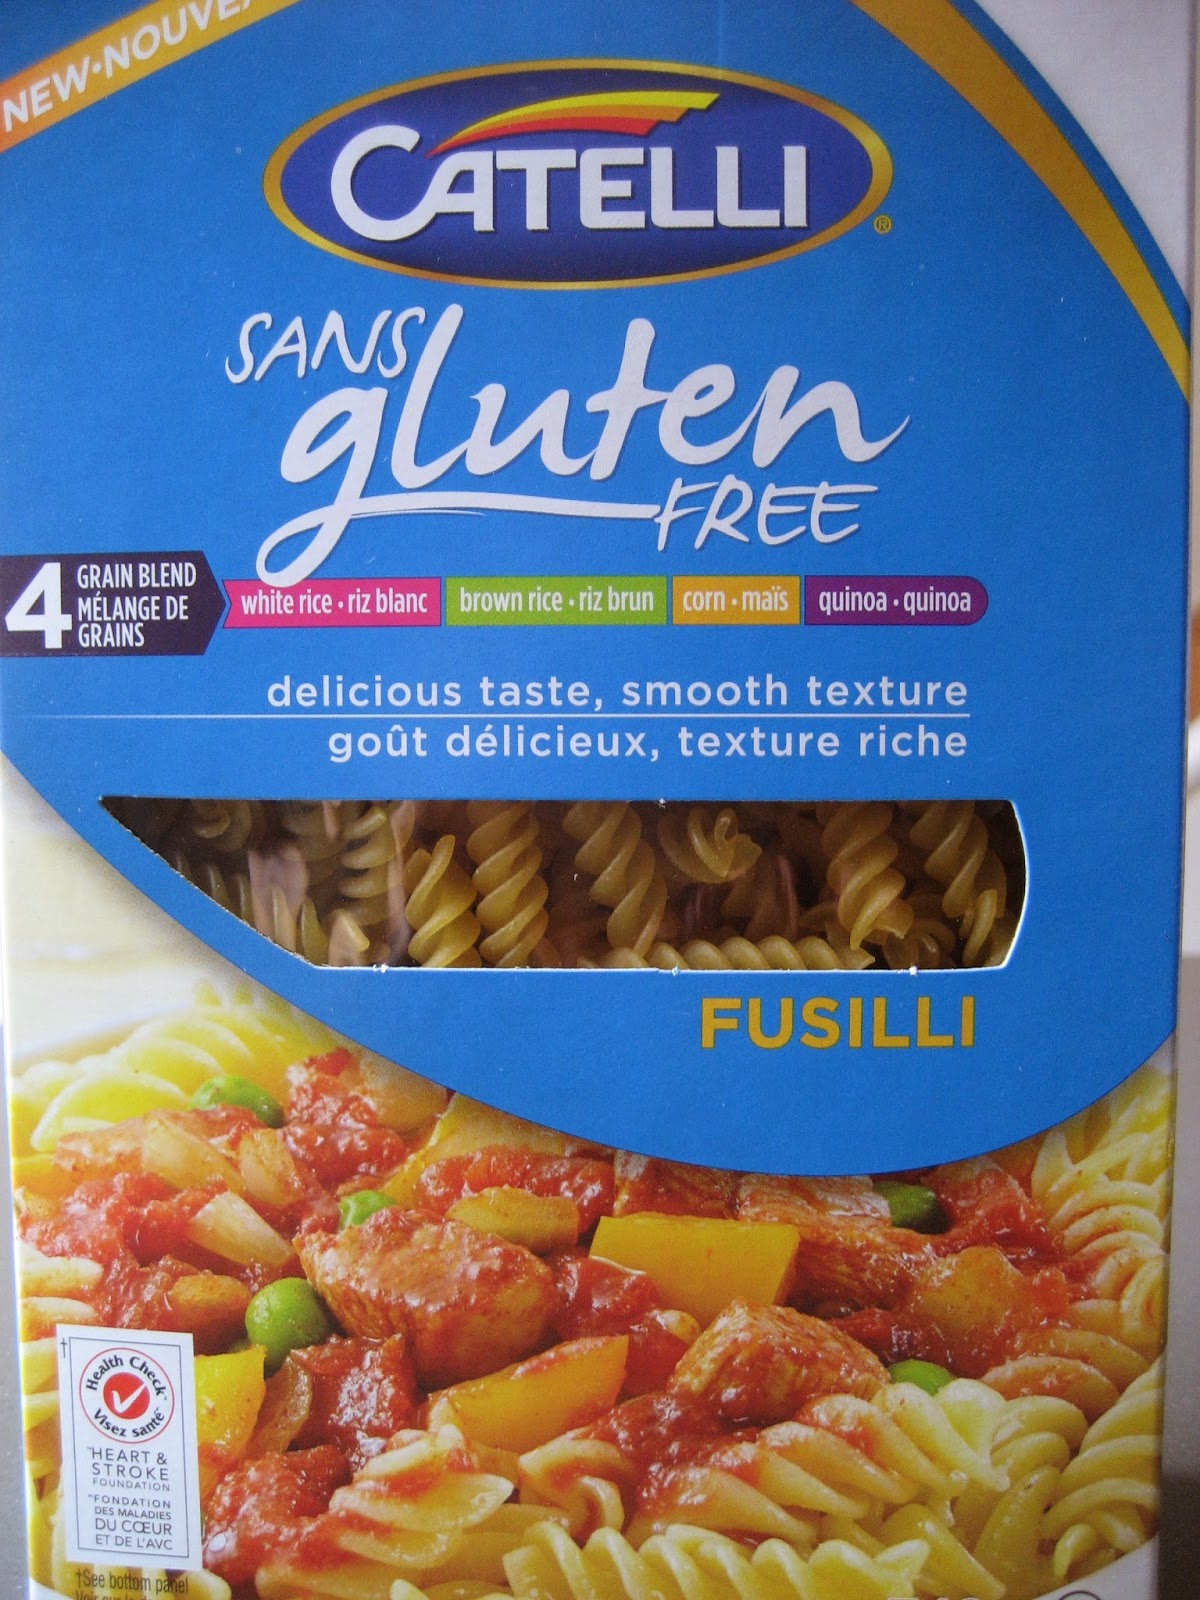 gluten free gift: Catelli Gluten-Free Pasta